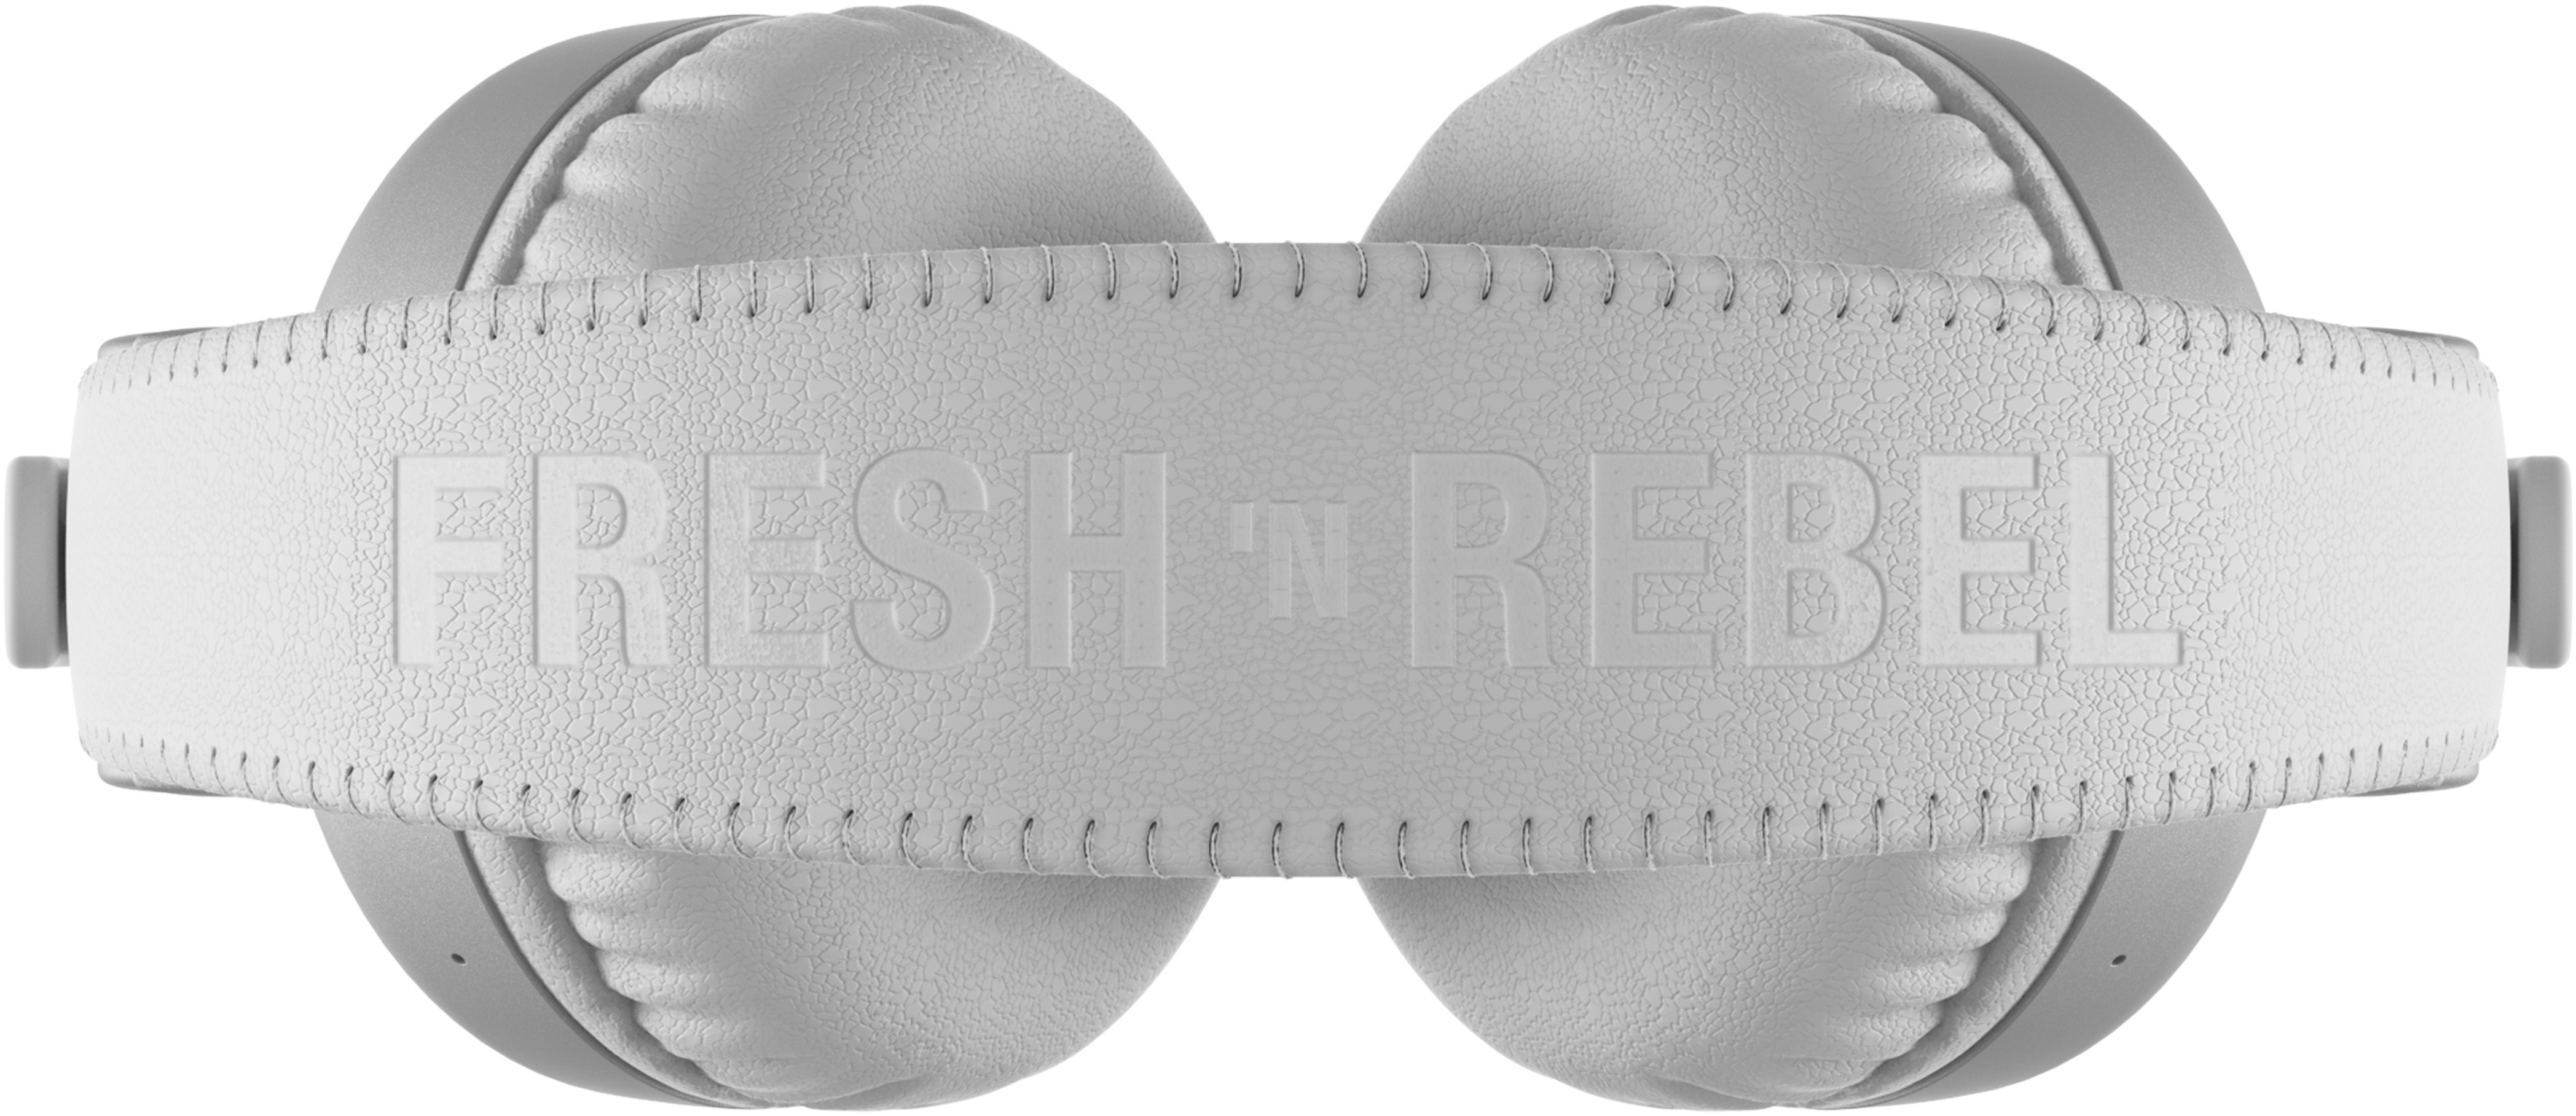 FRESH'N REBEL Code Core - Wless on-ear 3HP1000IG Ice Grey